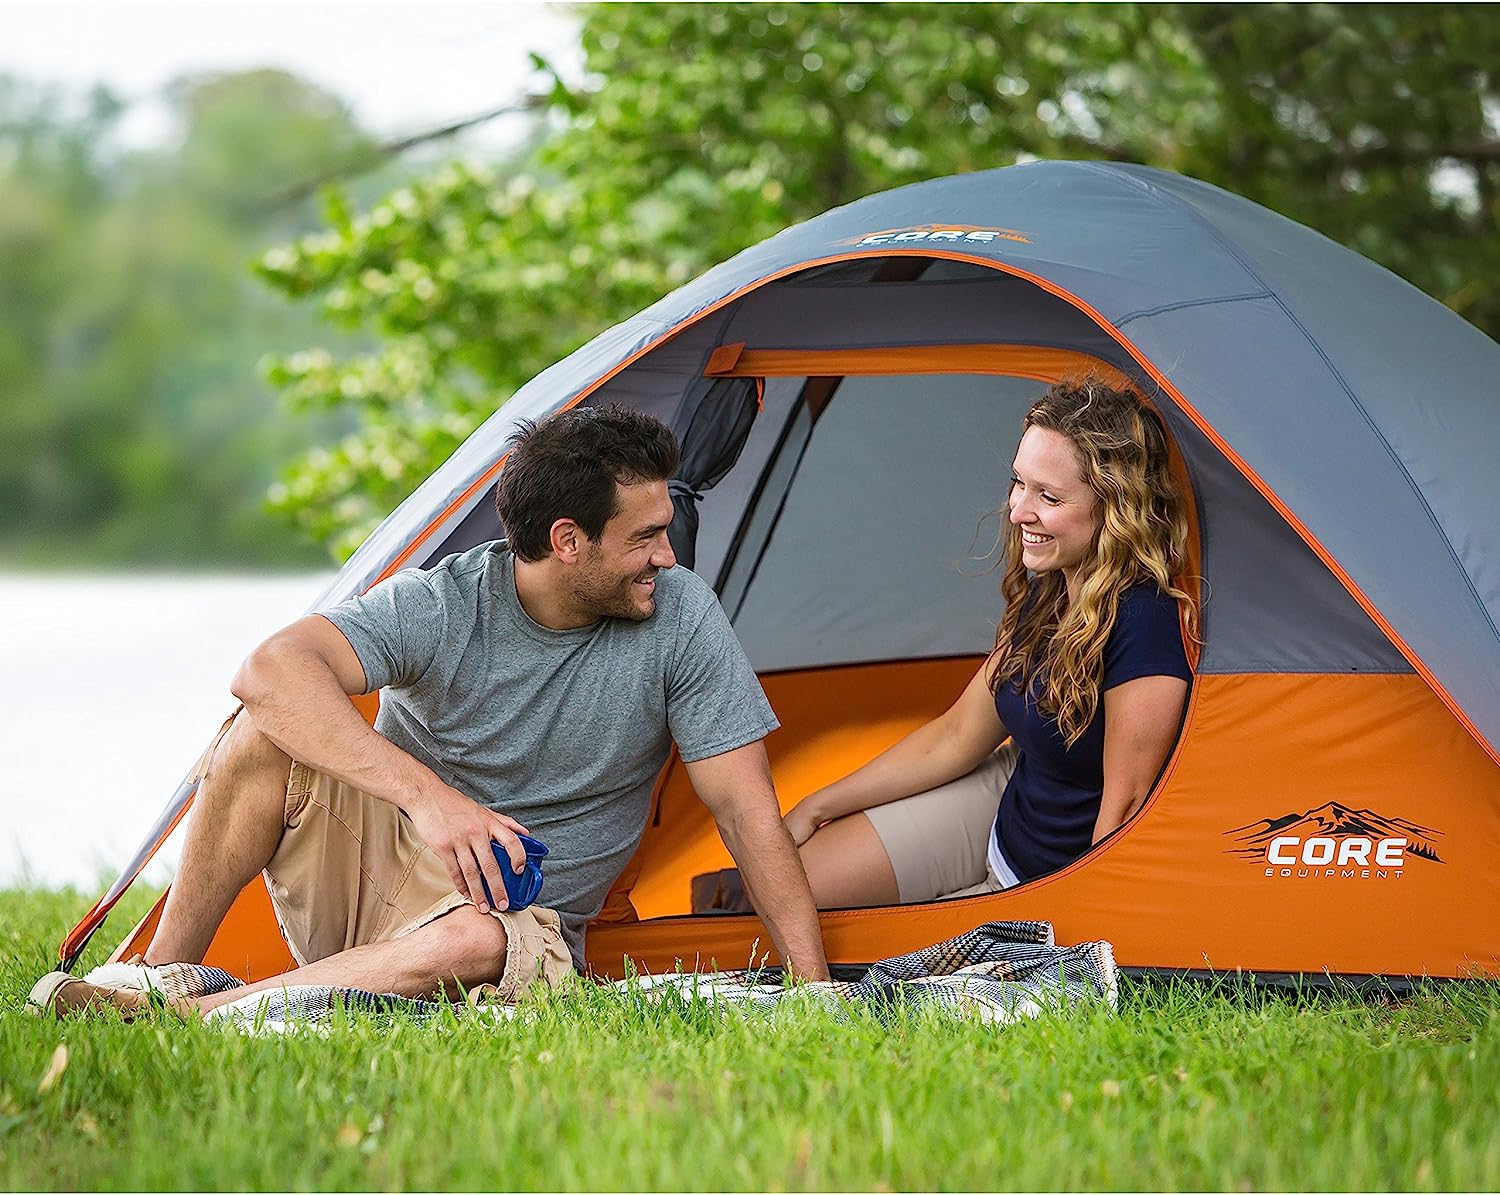 core tents review image 